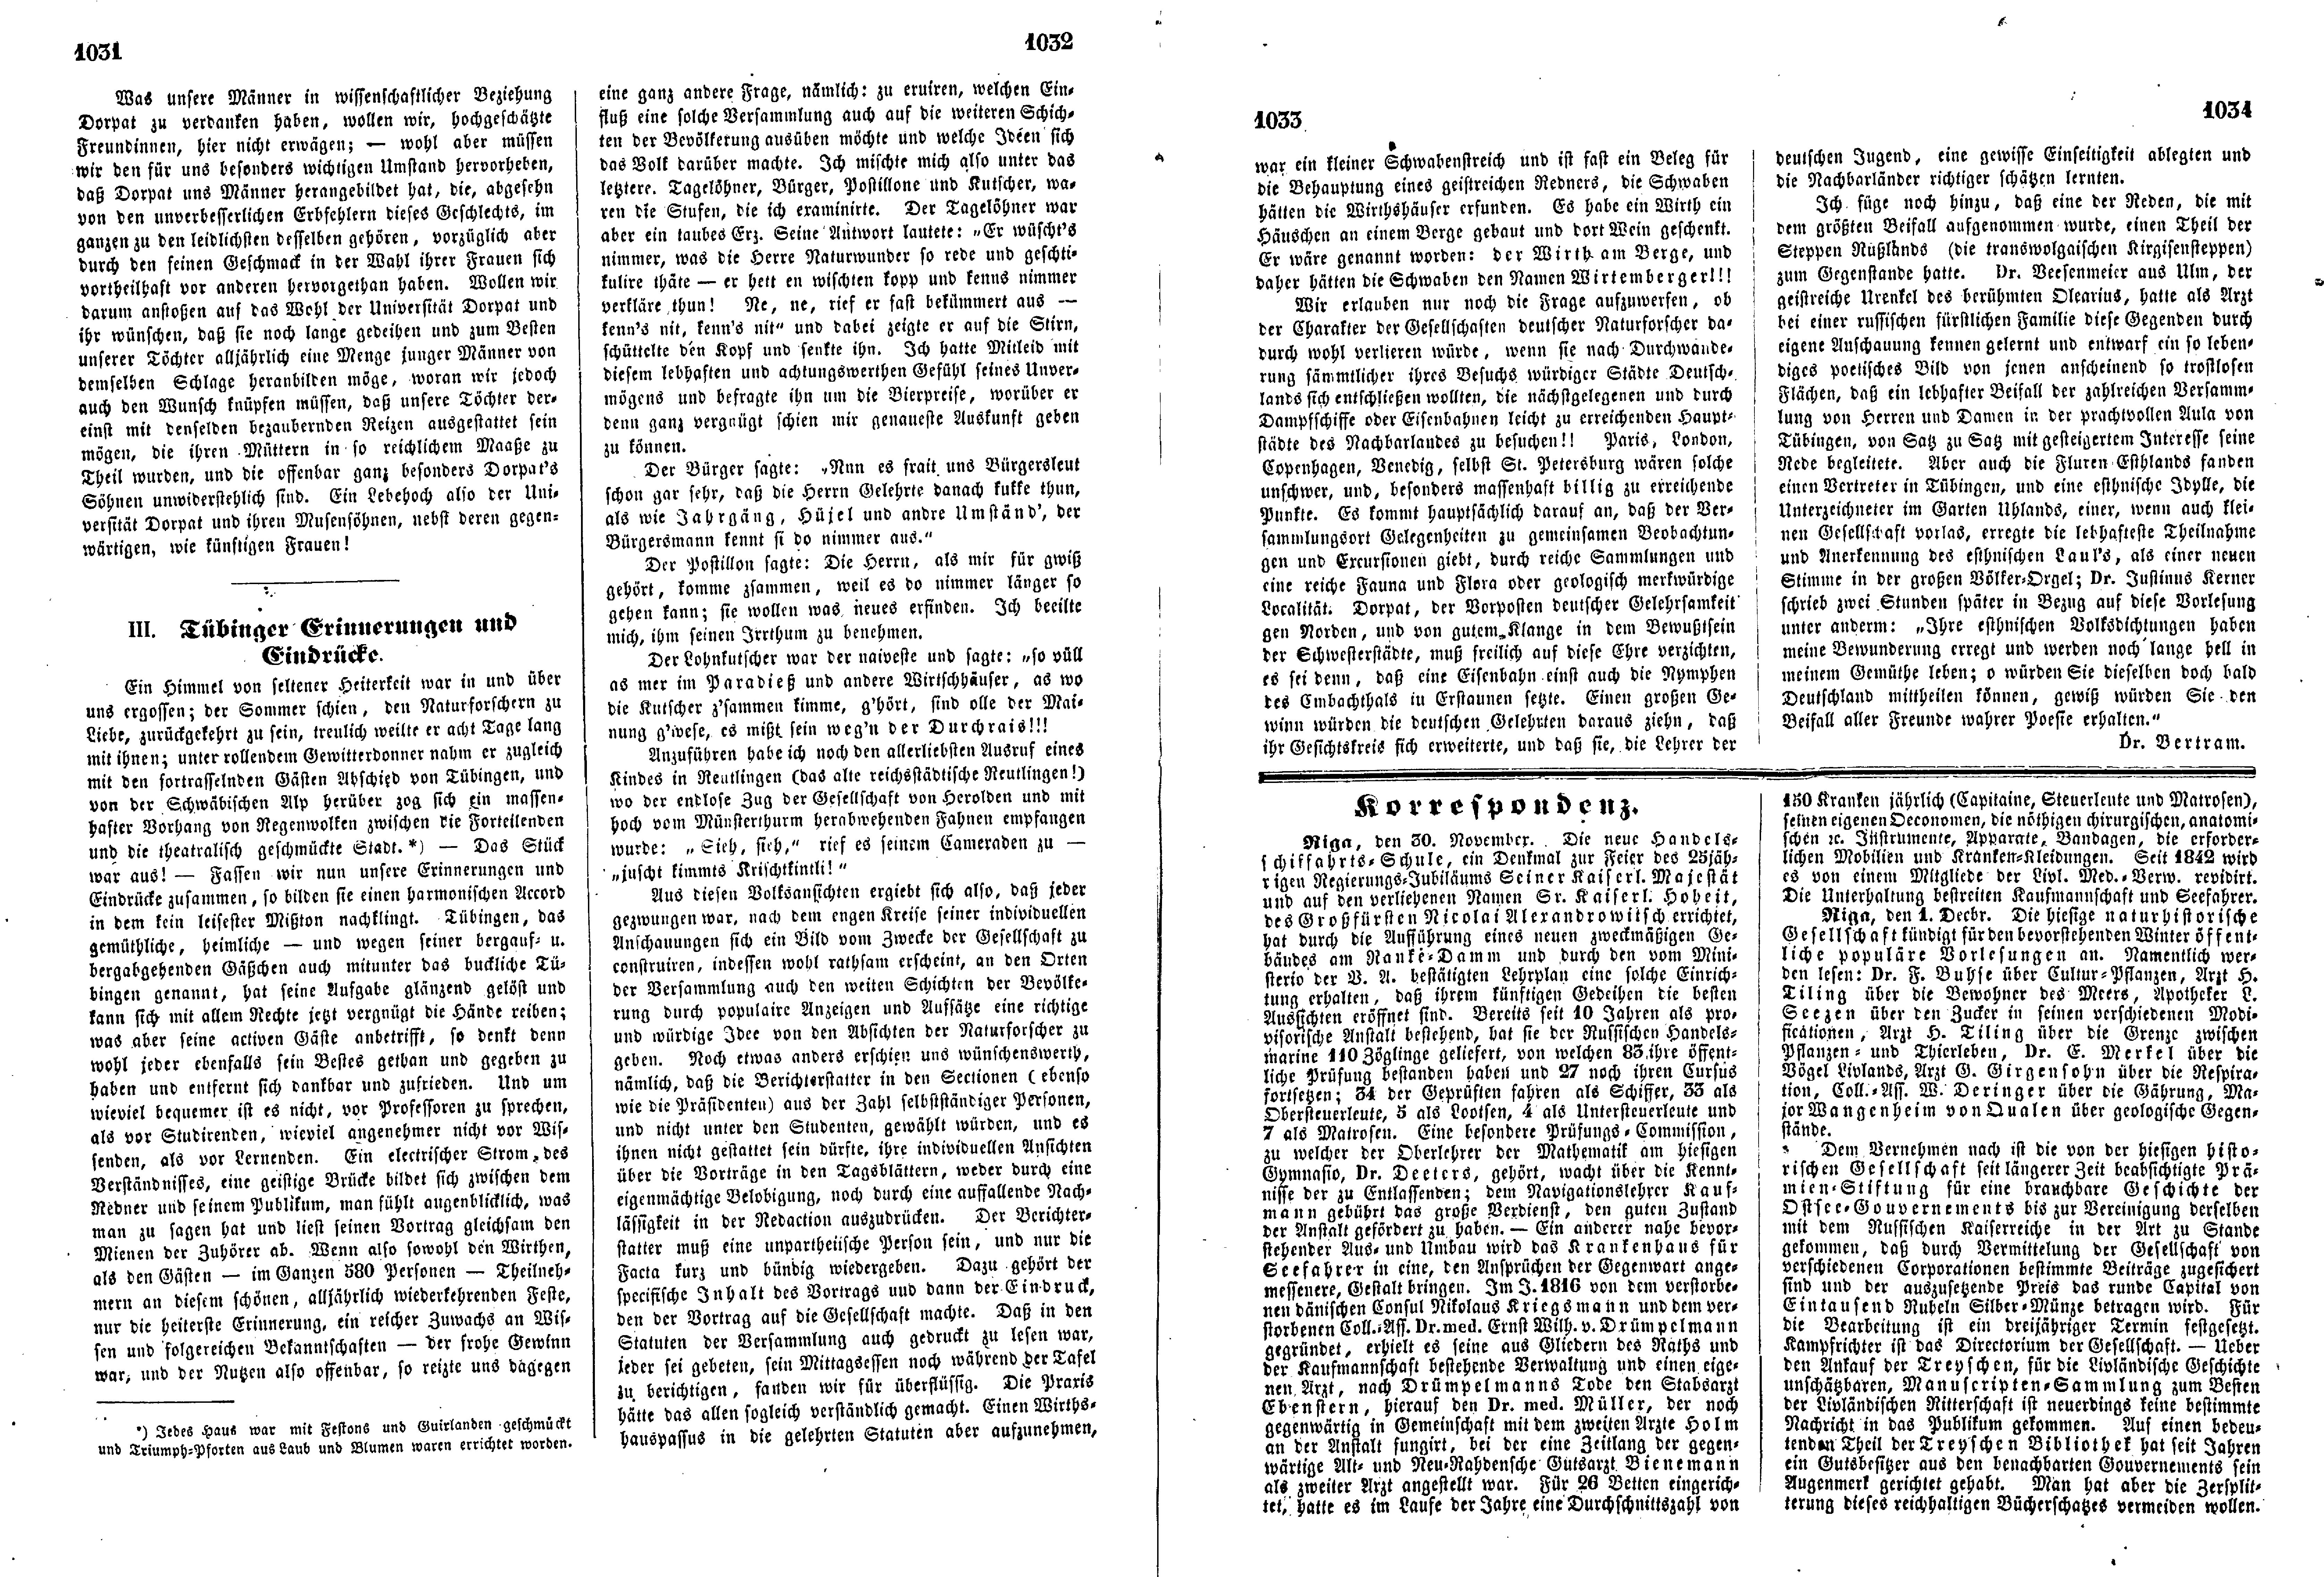 Das Inland [18] (1853) | 268. (1031-1034) Main body of text